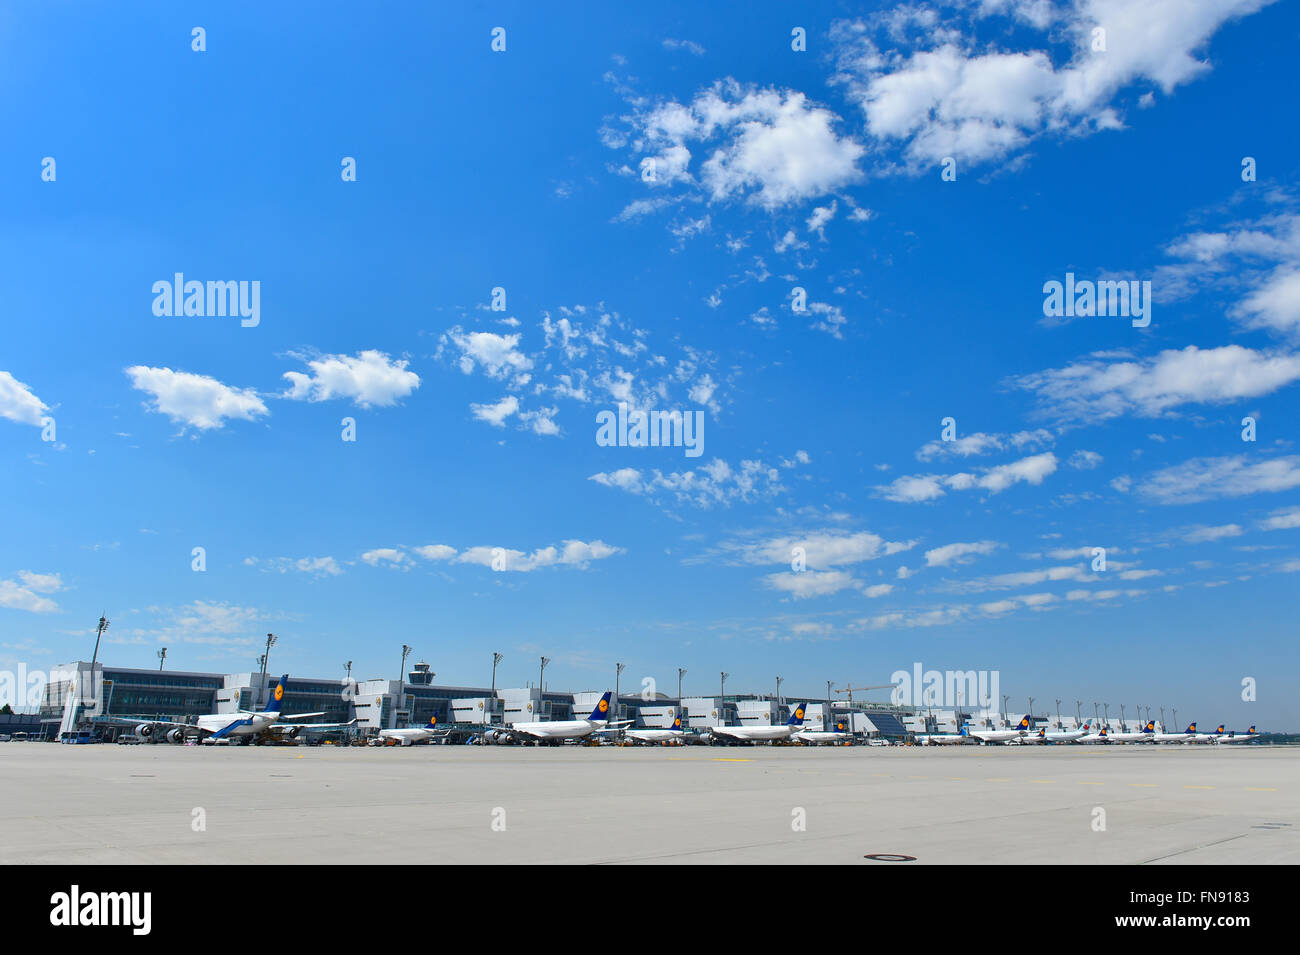 Il terminale 2, tower building, aereo, aeroporto, panoramica, panorama, visualizzare line up, aeromobili, aereo, piano, sole, cielo blu, Foto Stock